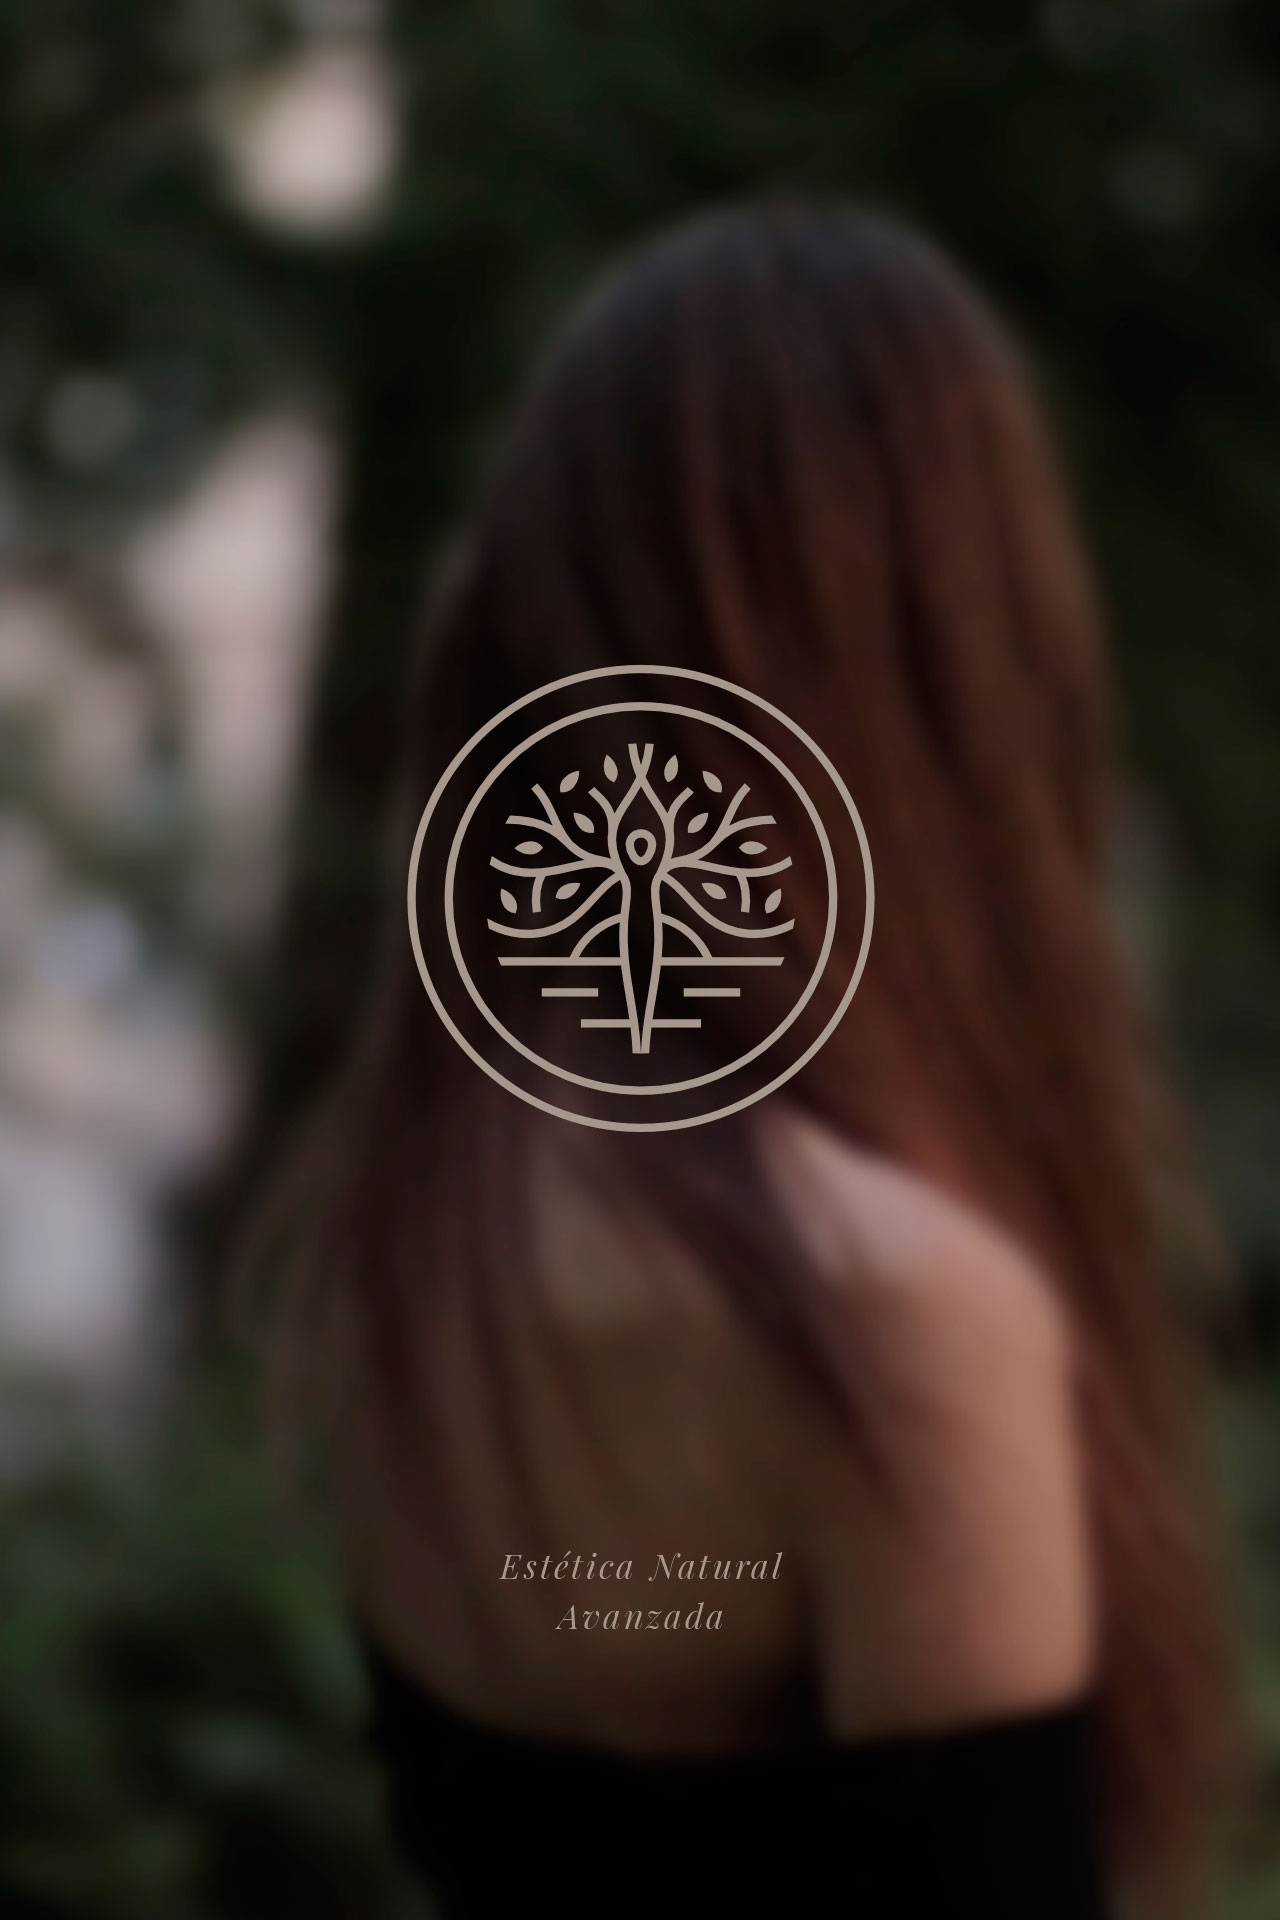 laura cid estetica natural logo - javier real